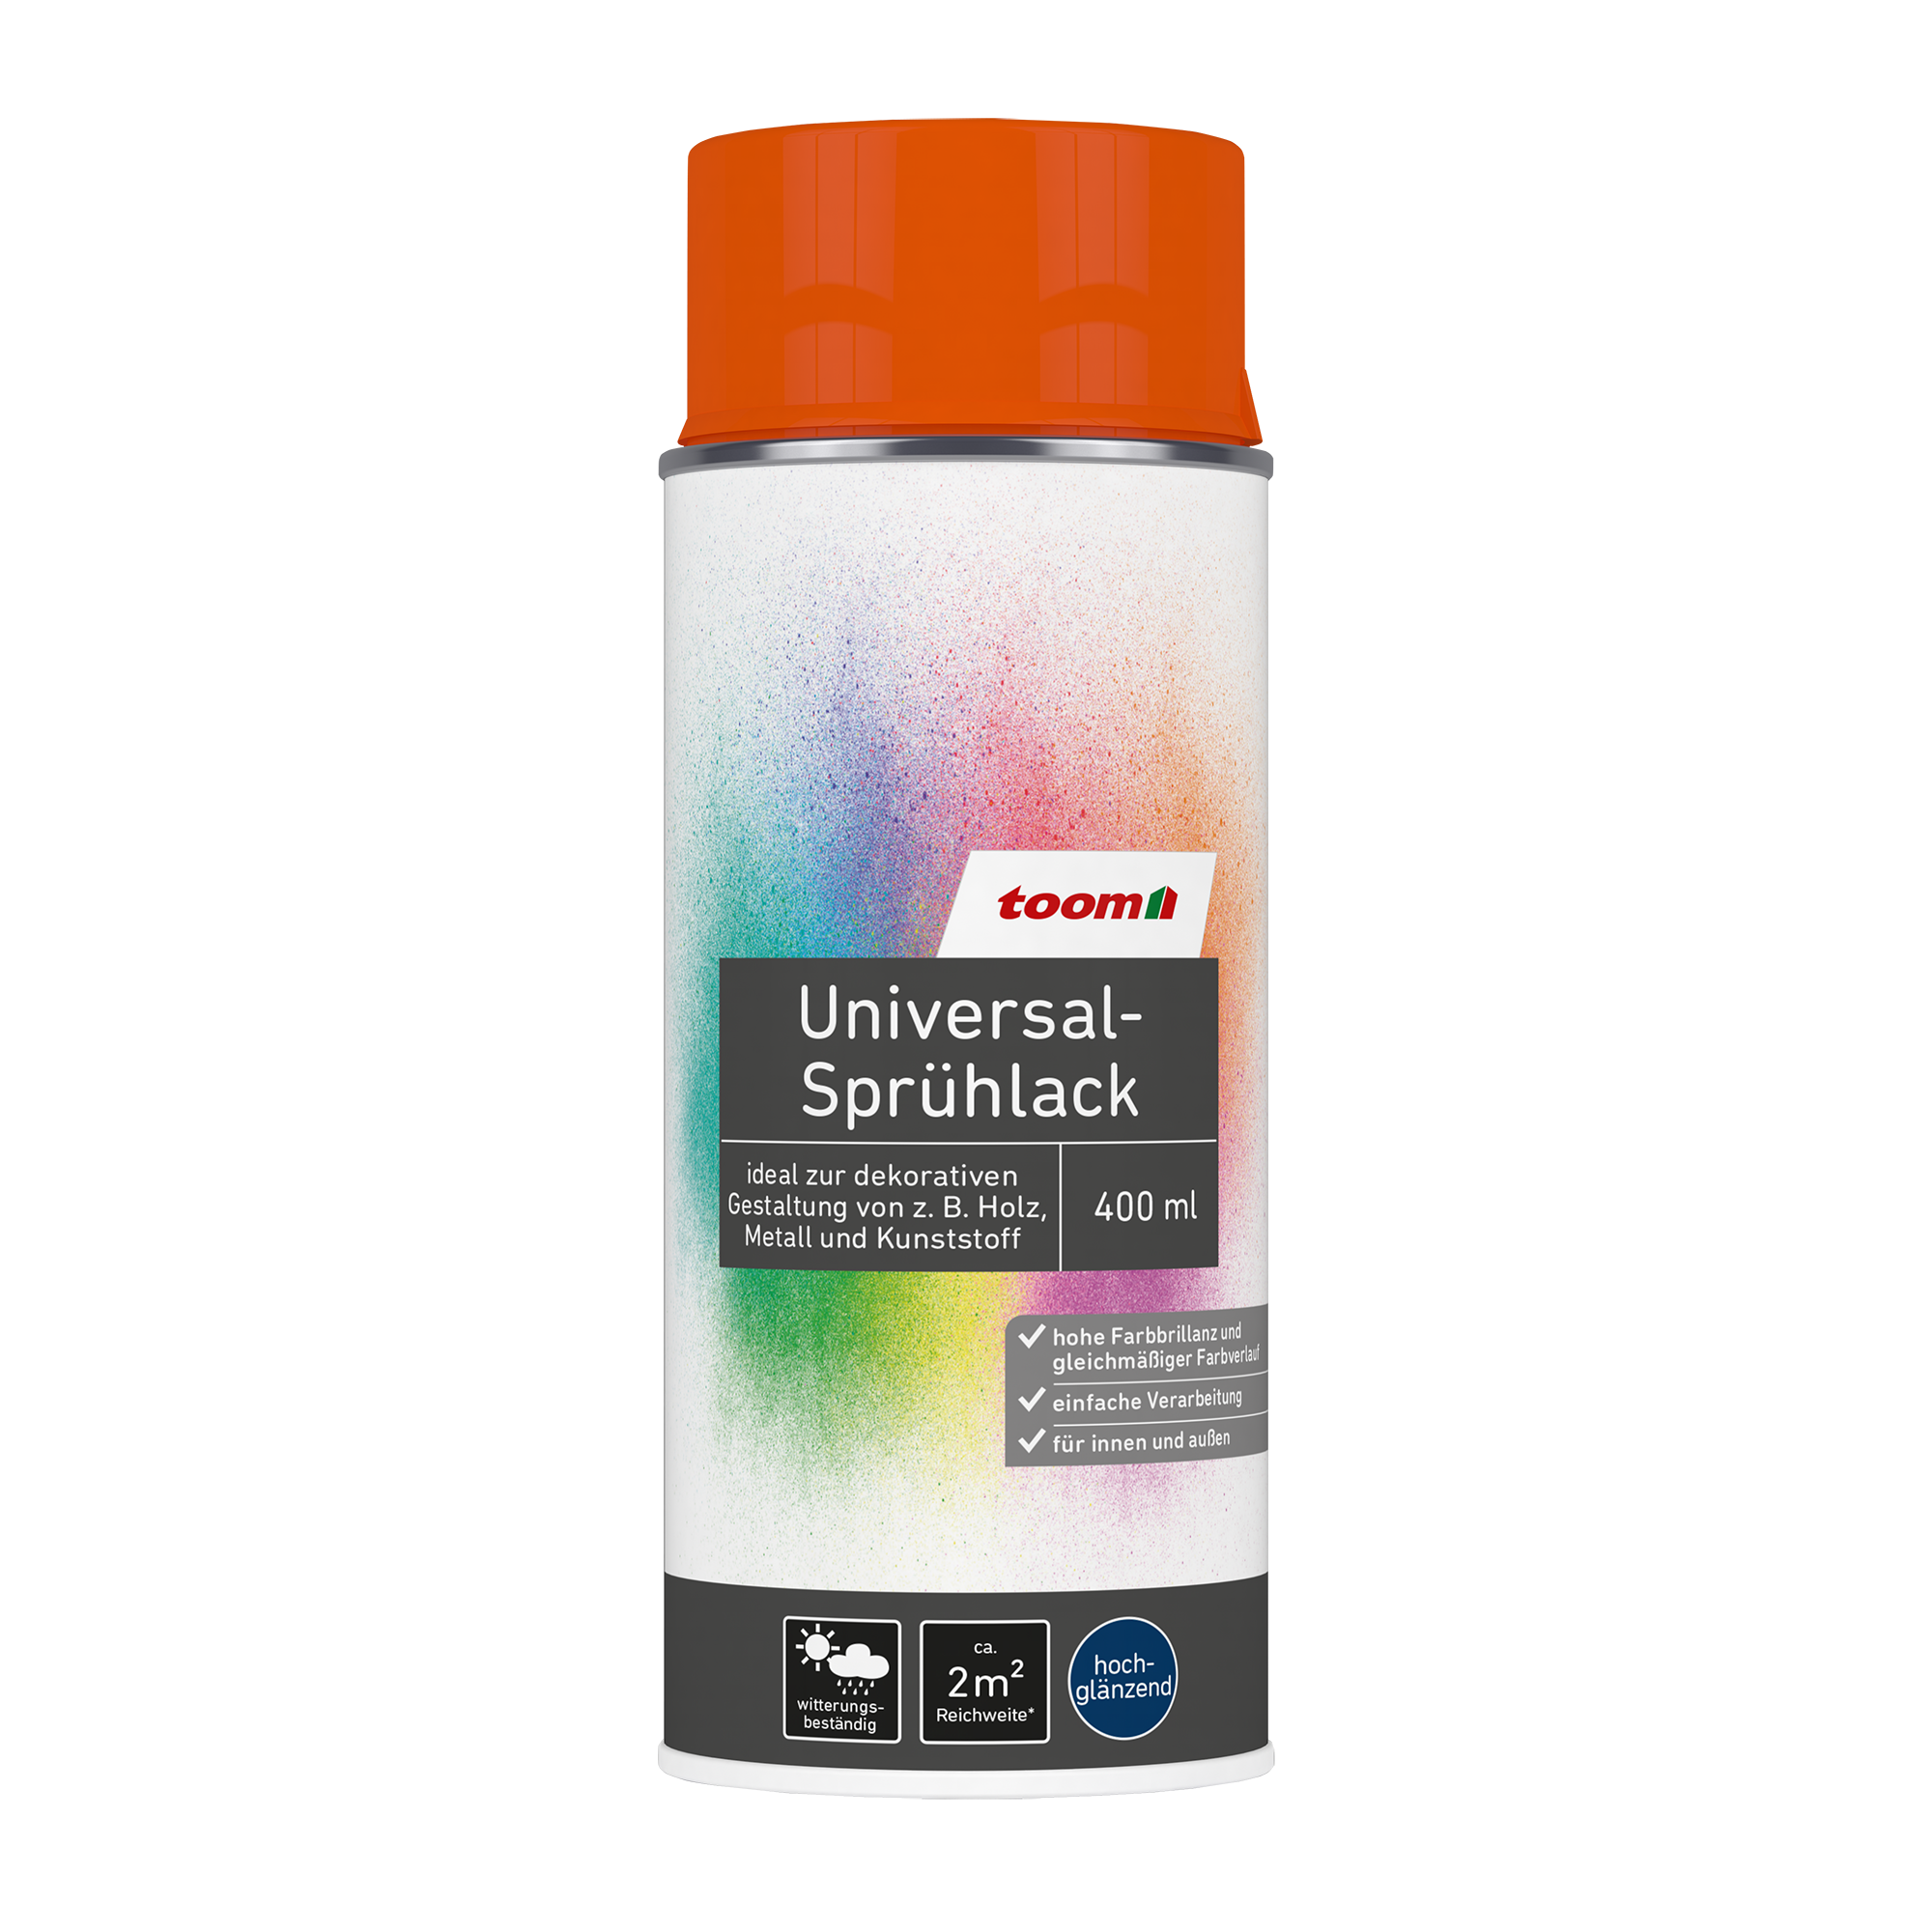 Universal-Sprühlack 'Feuerglut' orange glänzend 400 ml + product picture